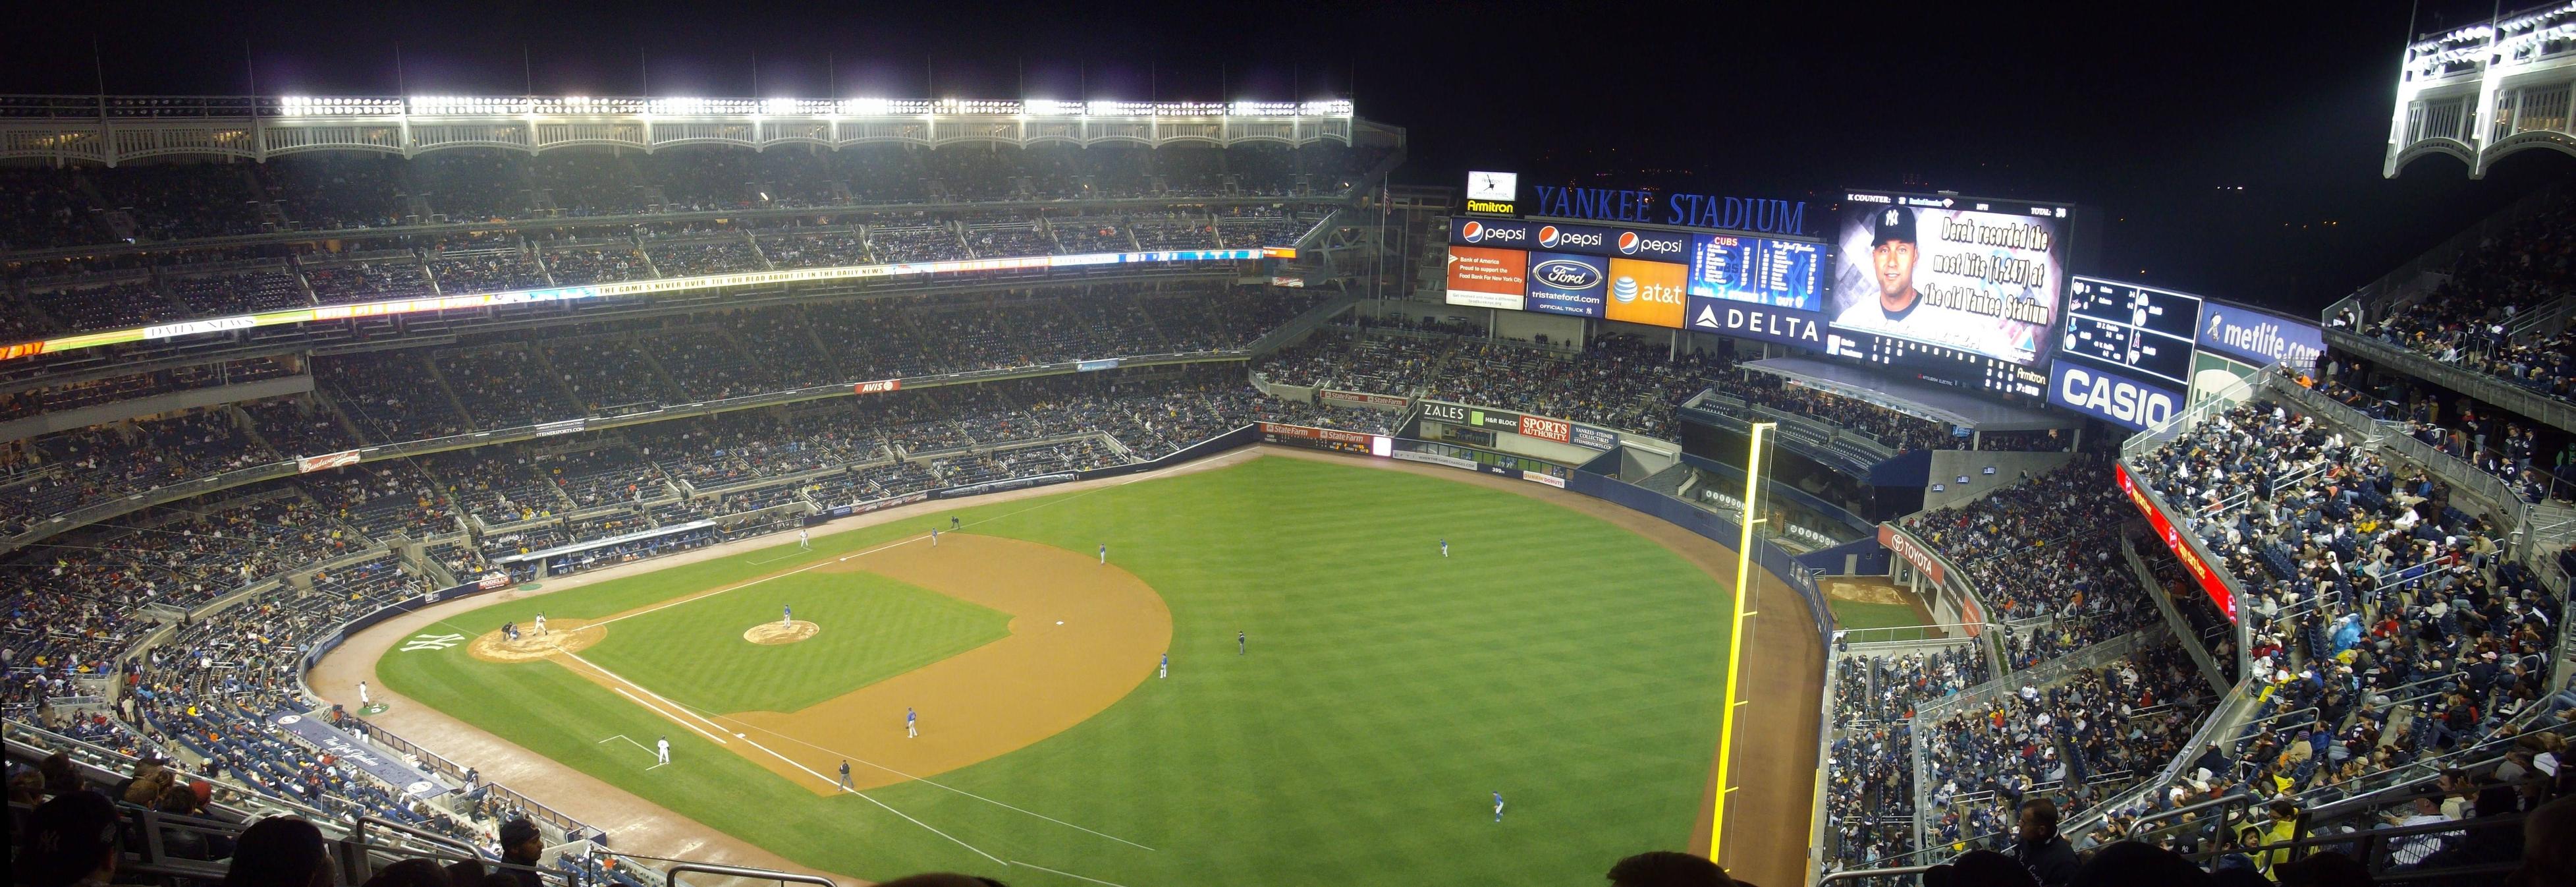 Yankee Stadium Wide Wallpaper, Download Free HD Wallpaper